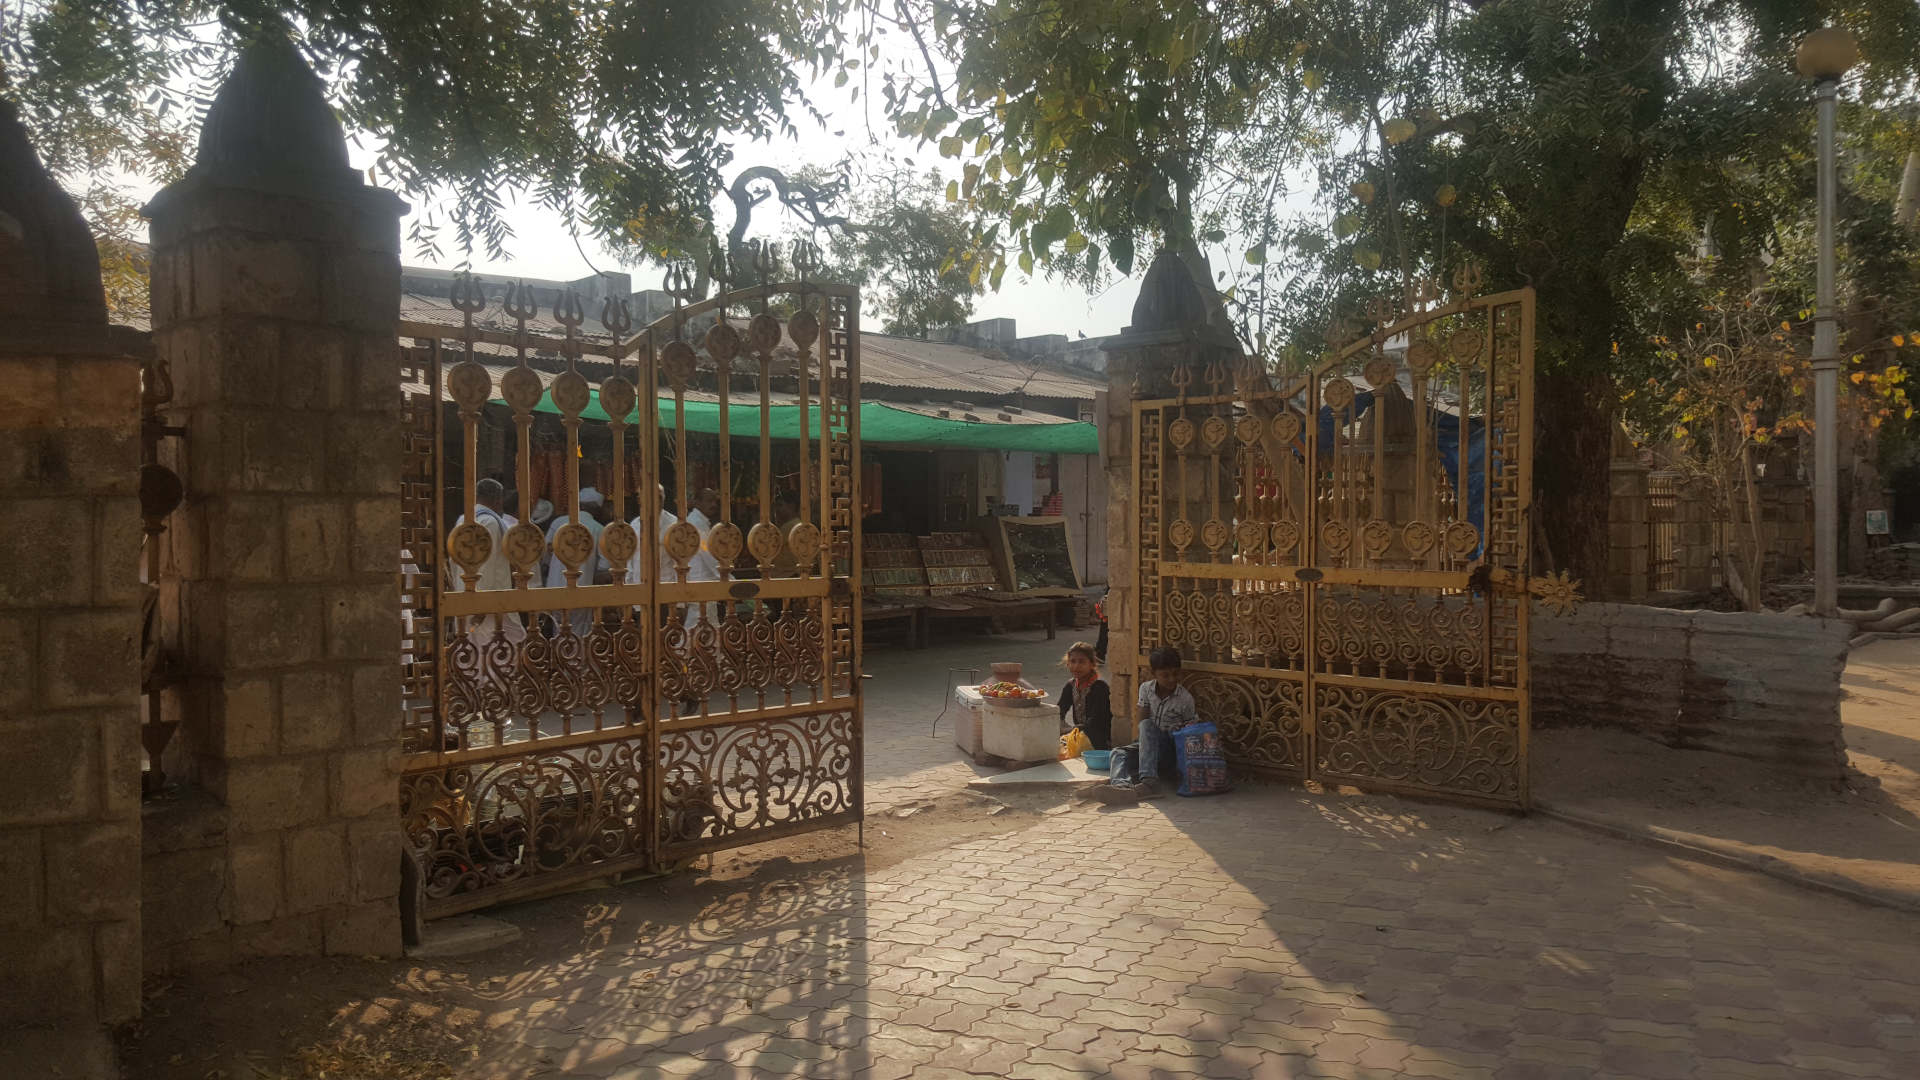 Gates of Becharaji Mandir Garden.